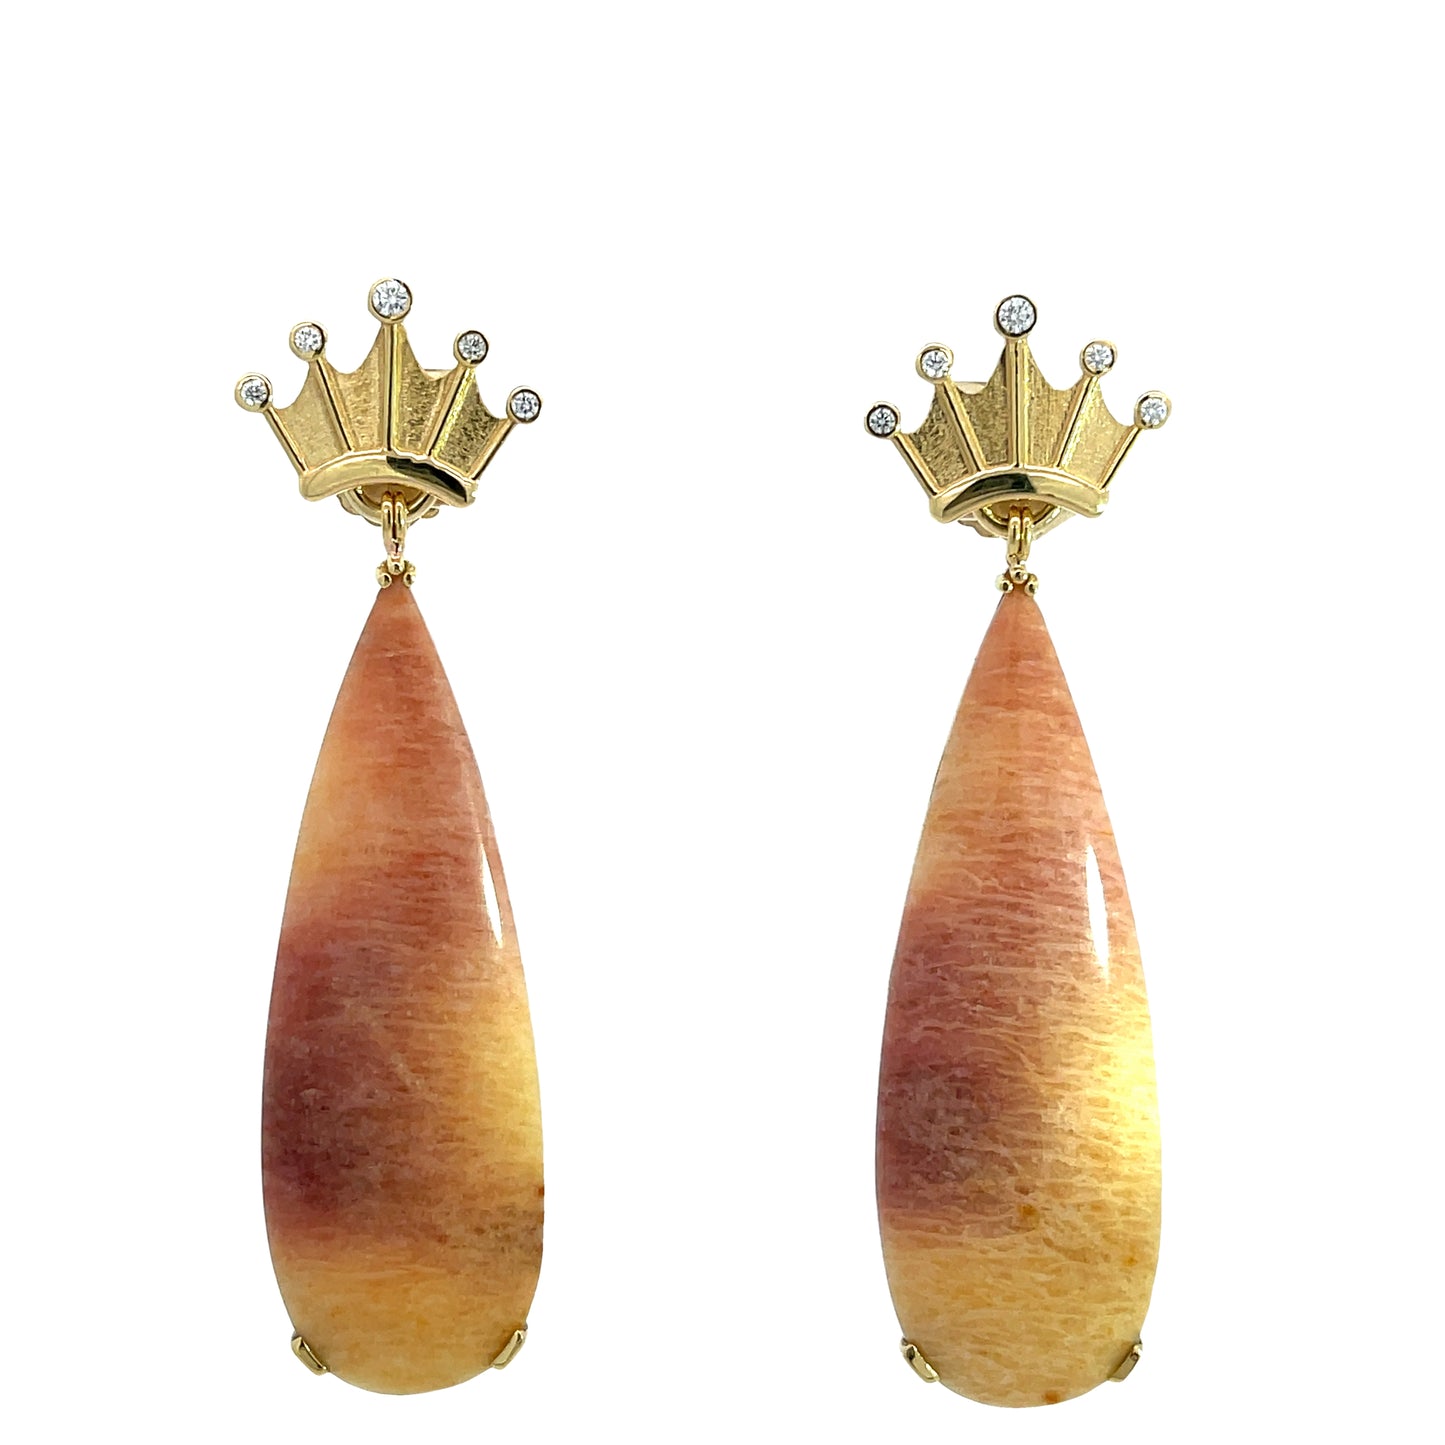 18k Yellow Gold Diamond Crown Studs